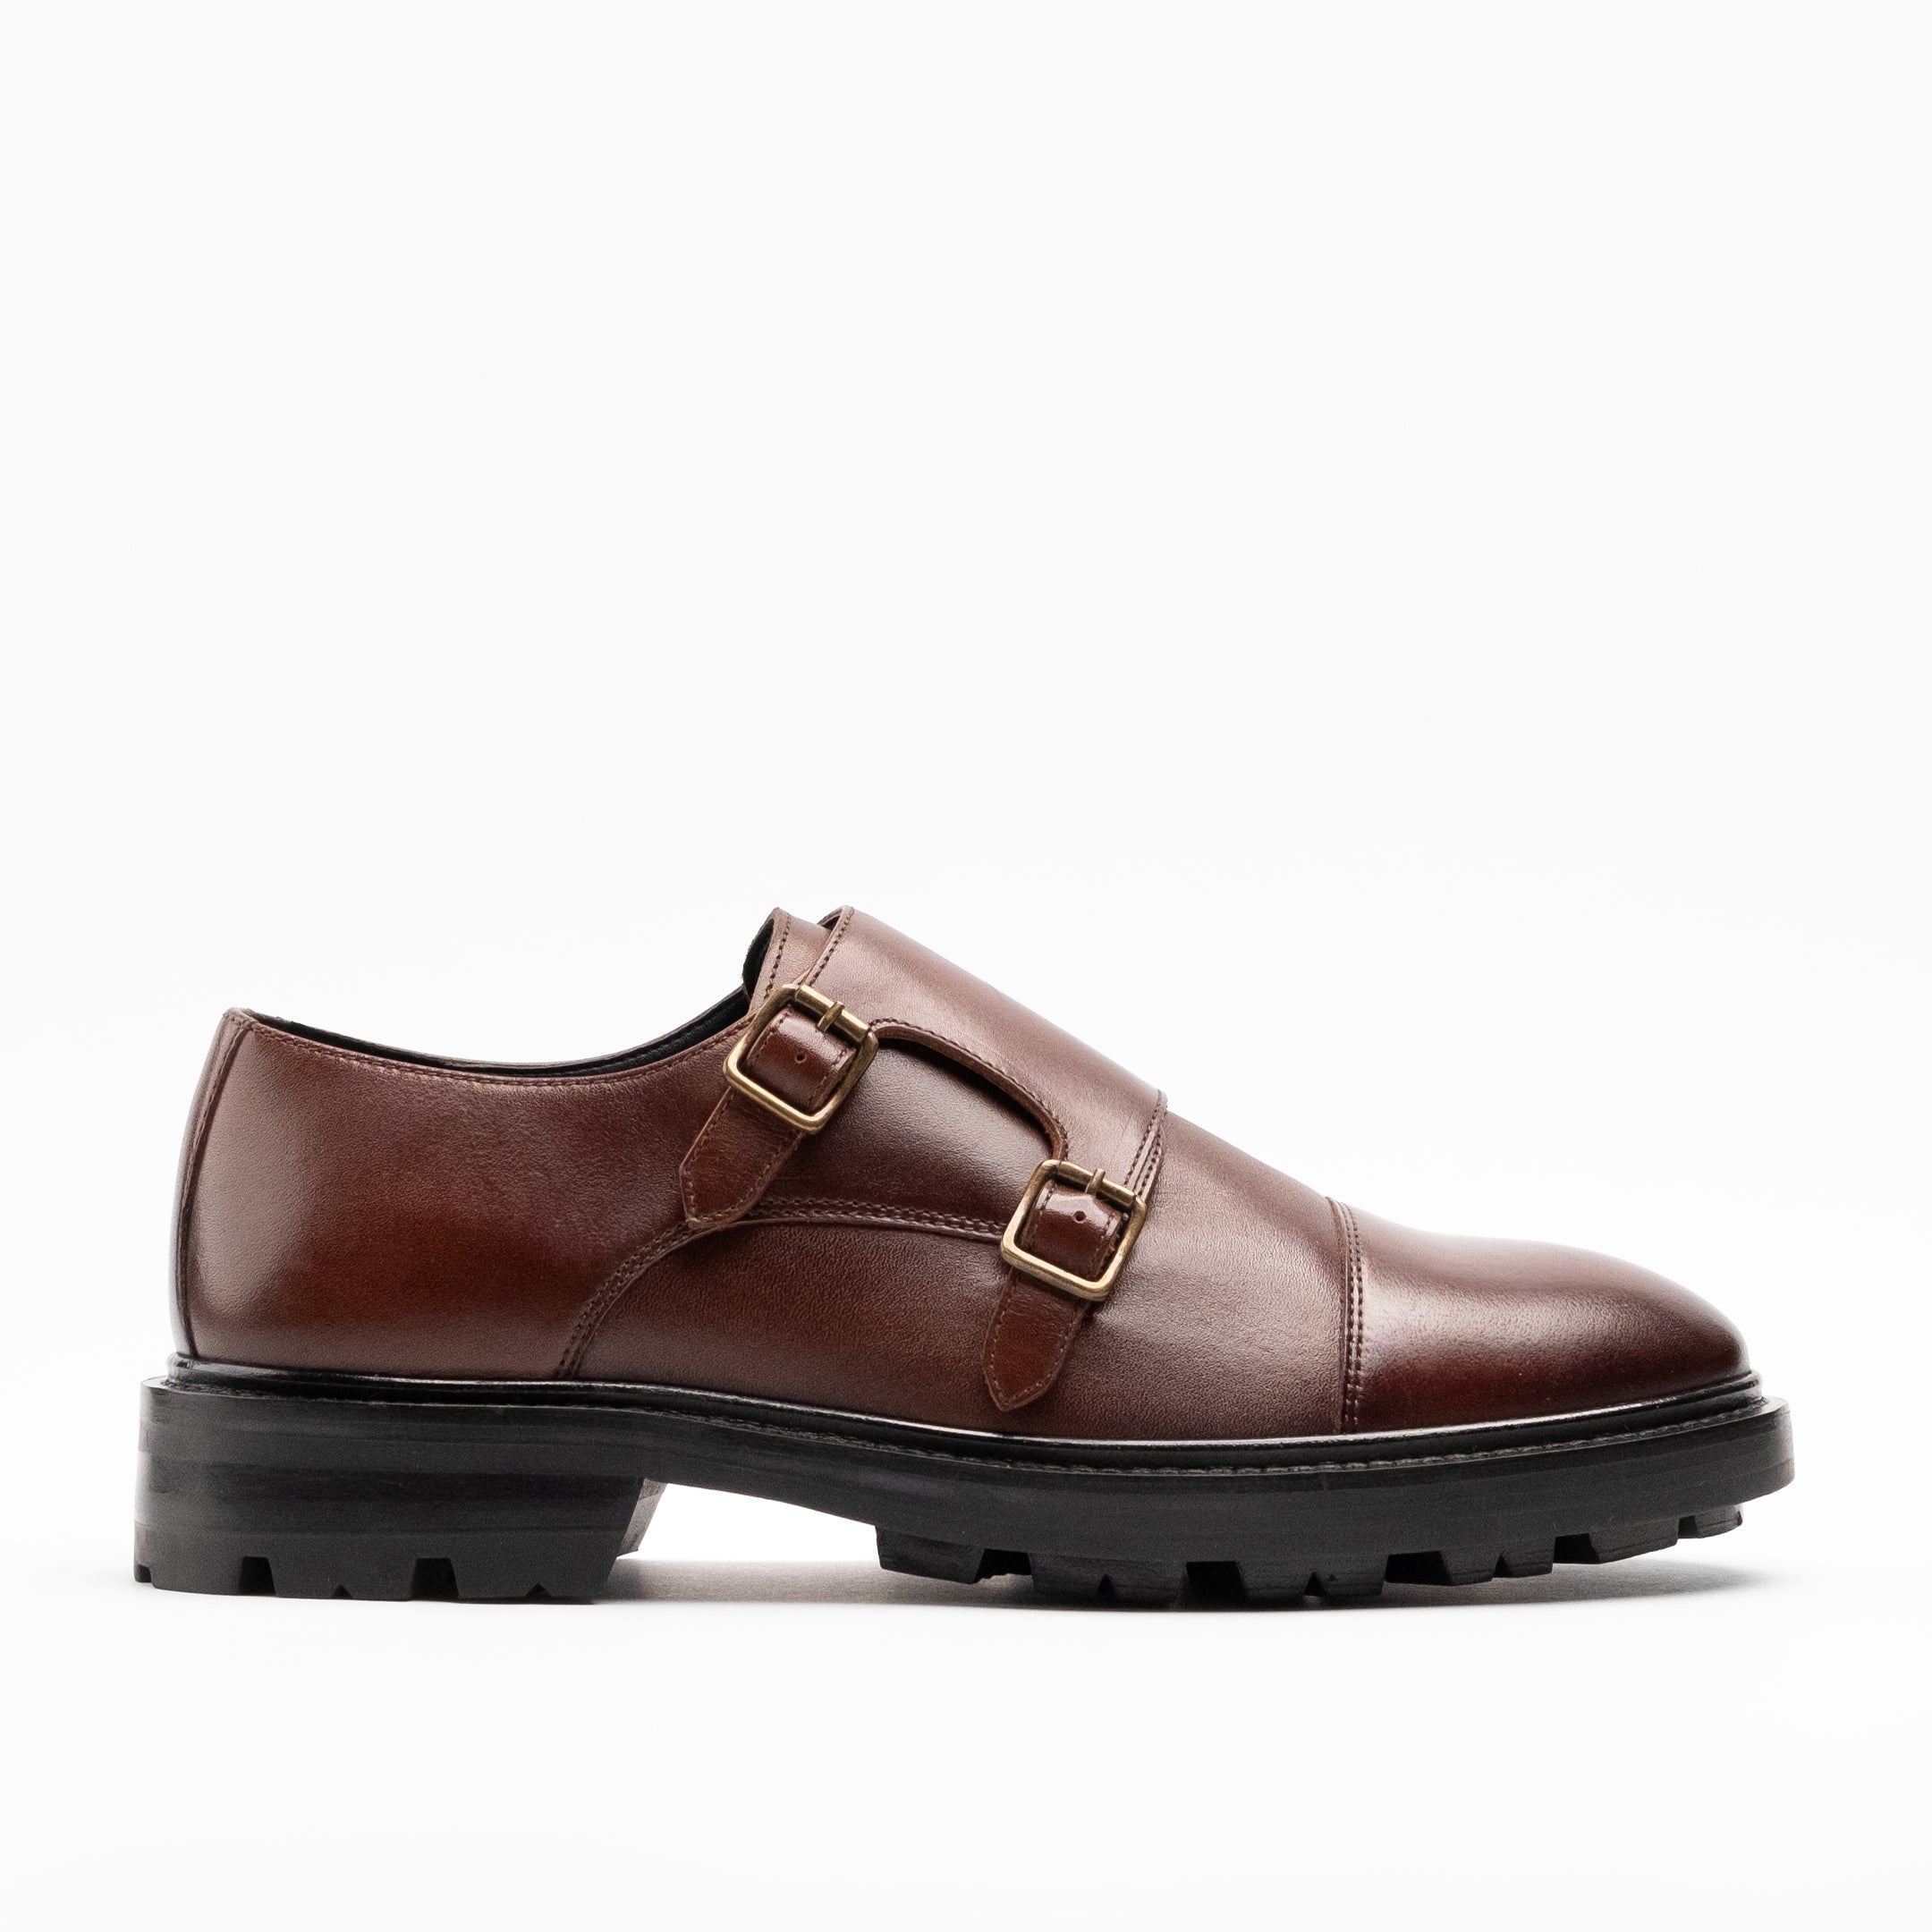 Walk London Mens Justin Monk Shoe in Brown Leather